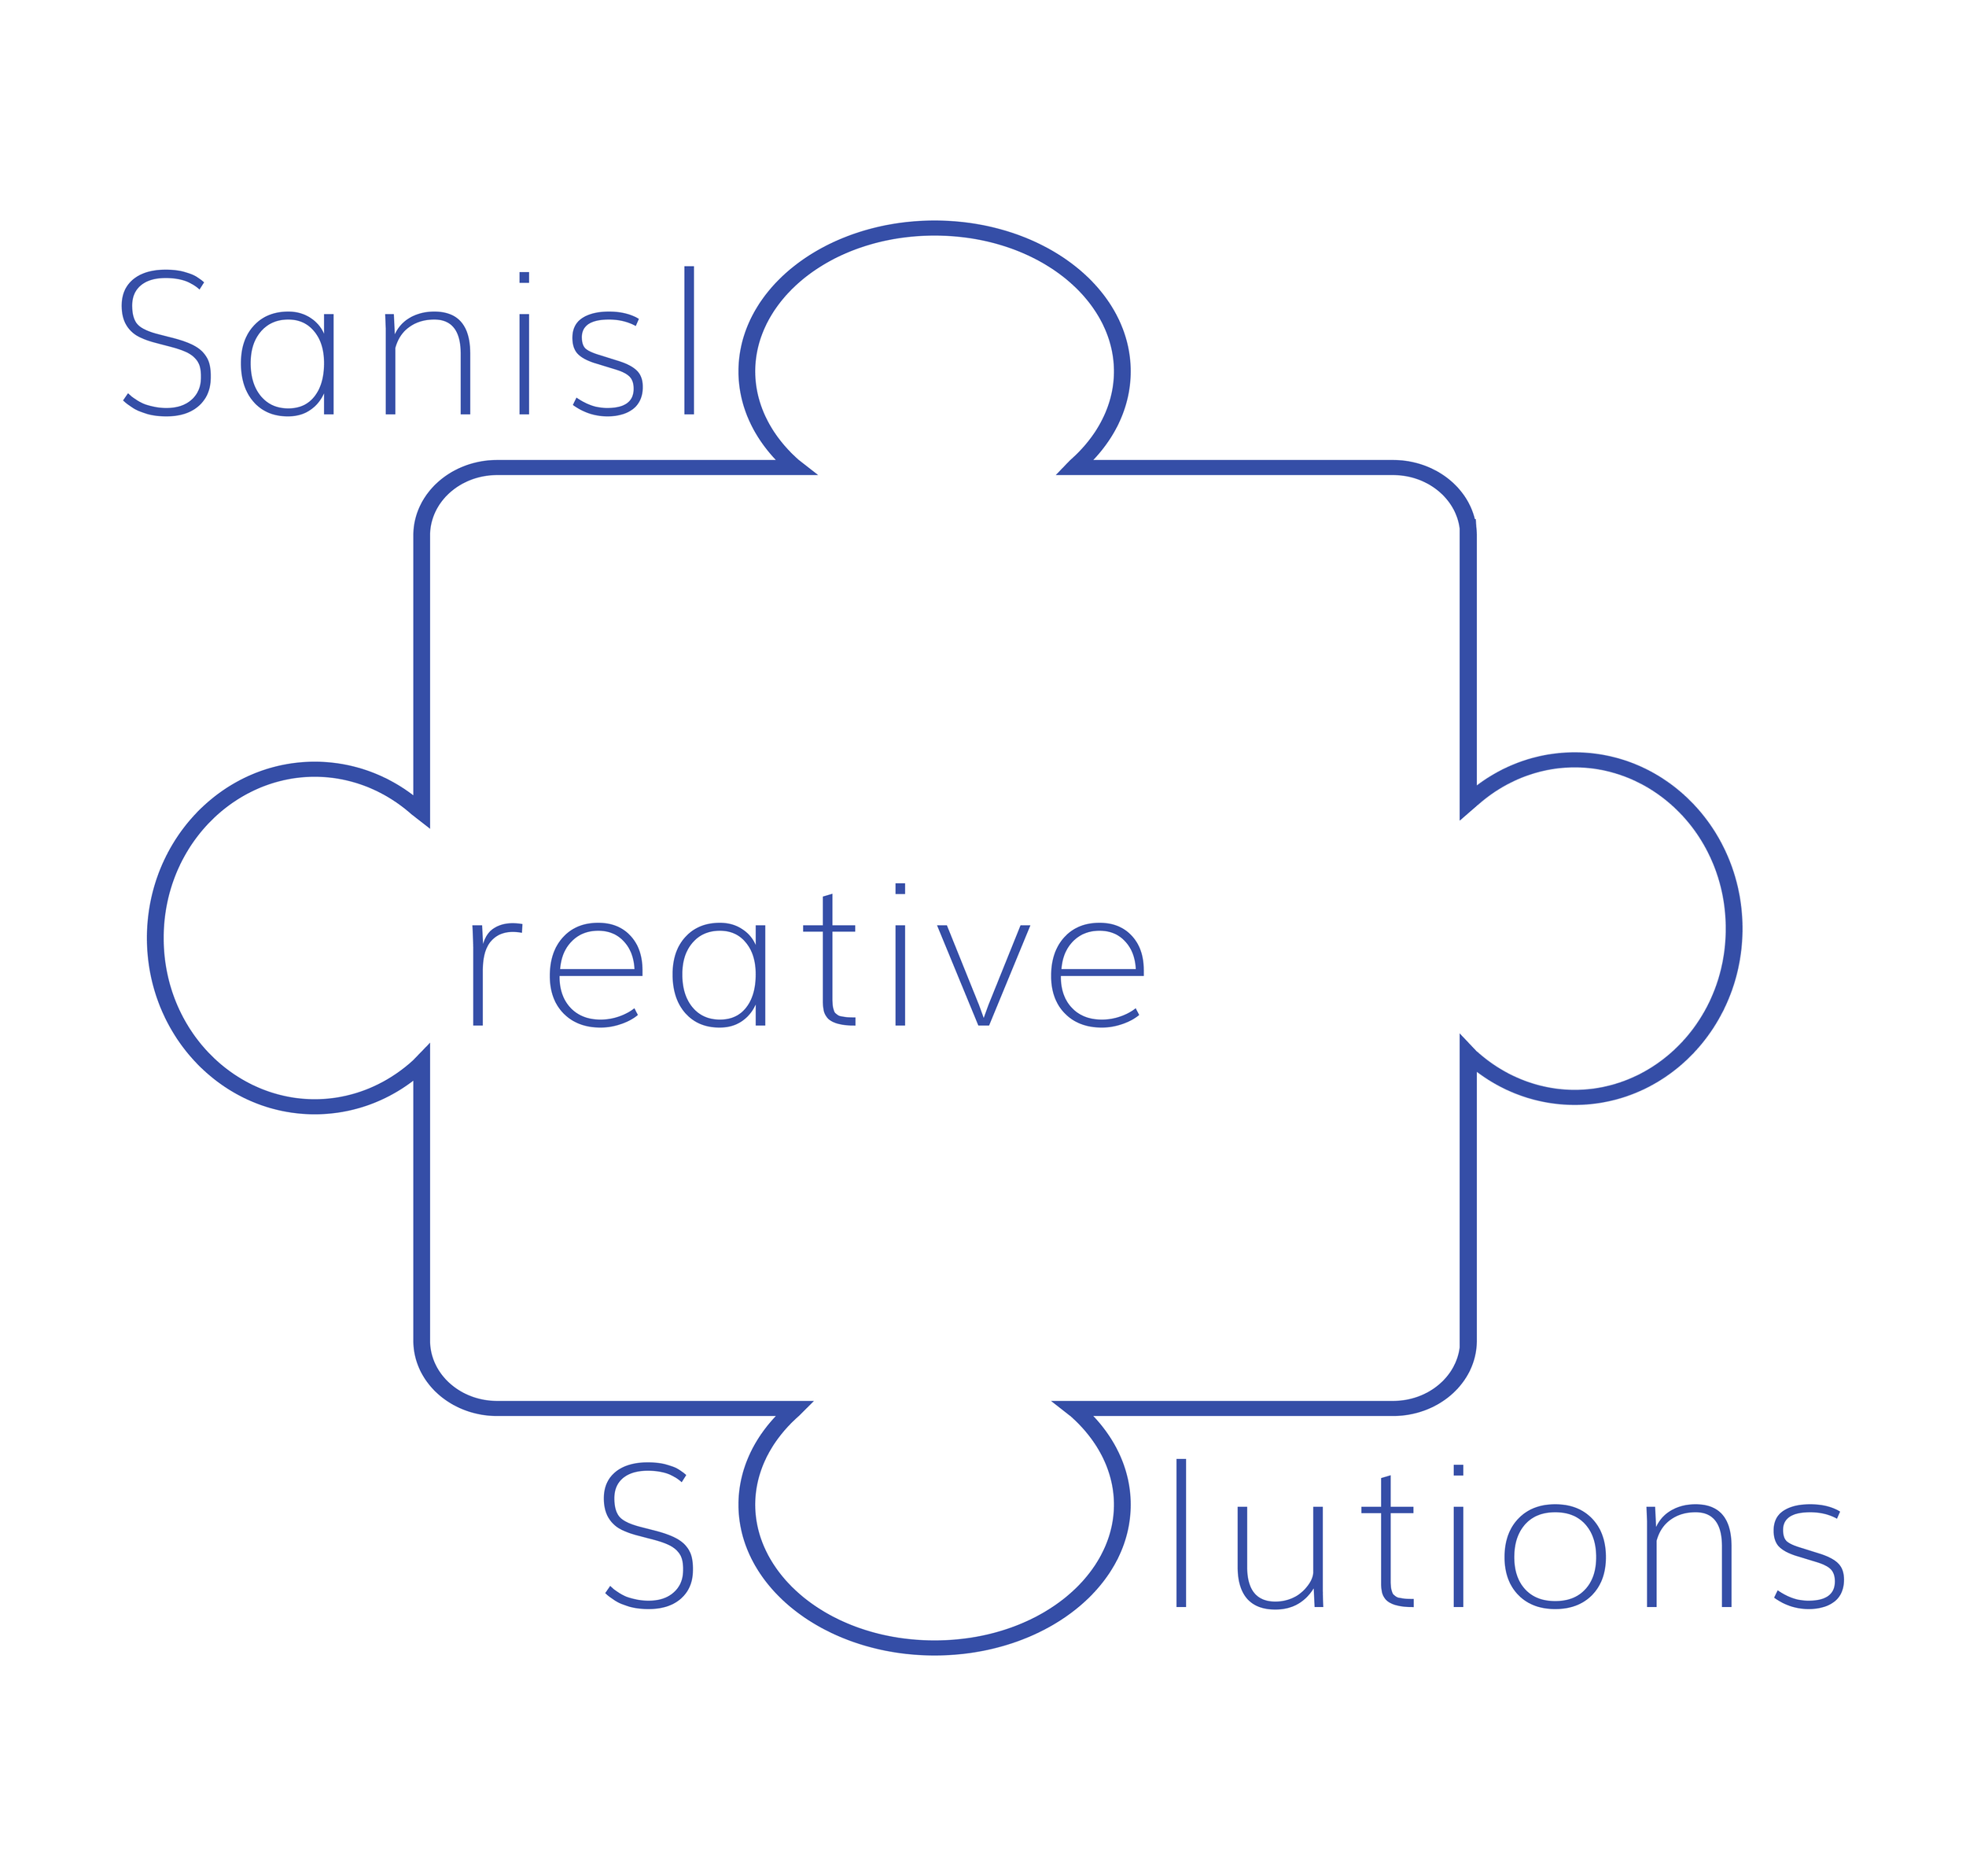 Sanislo Creative Solutions